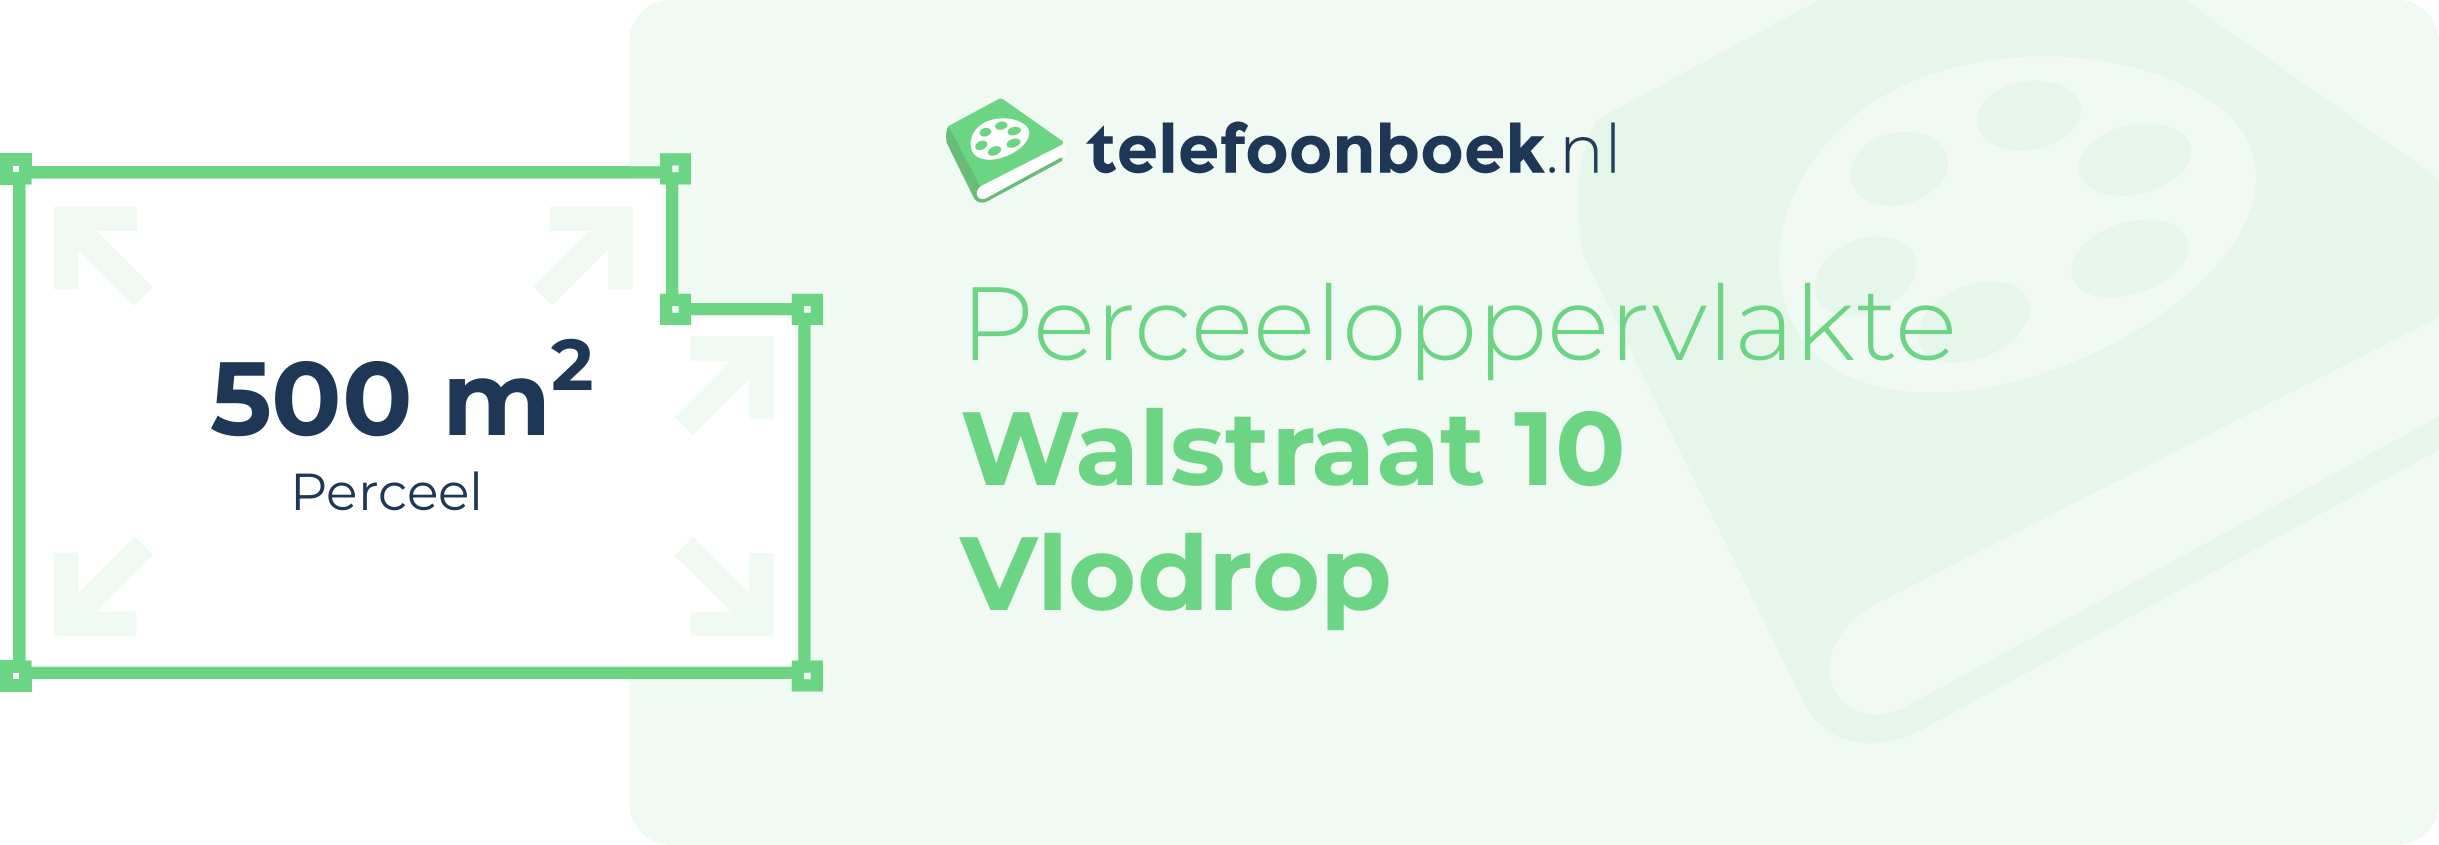 Perceeloppervlakte Walstraat 10 Vlodrop